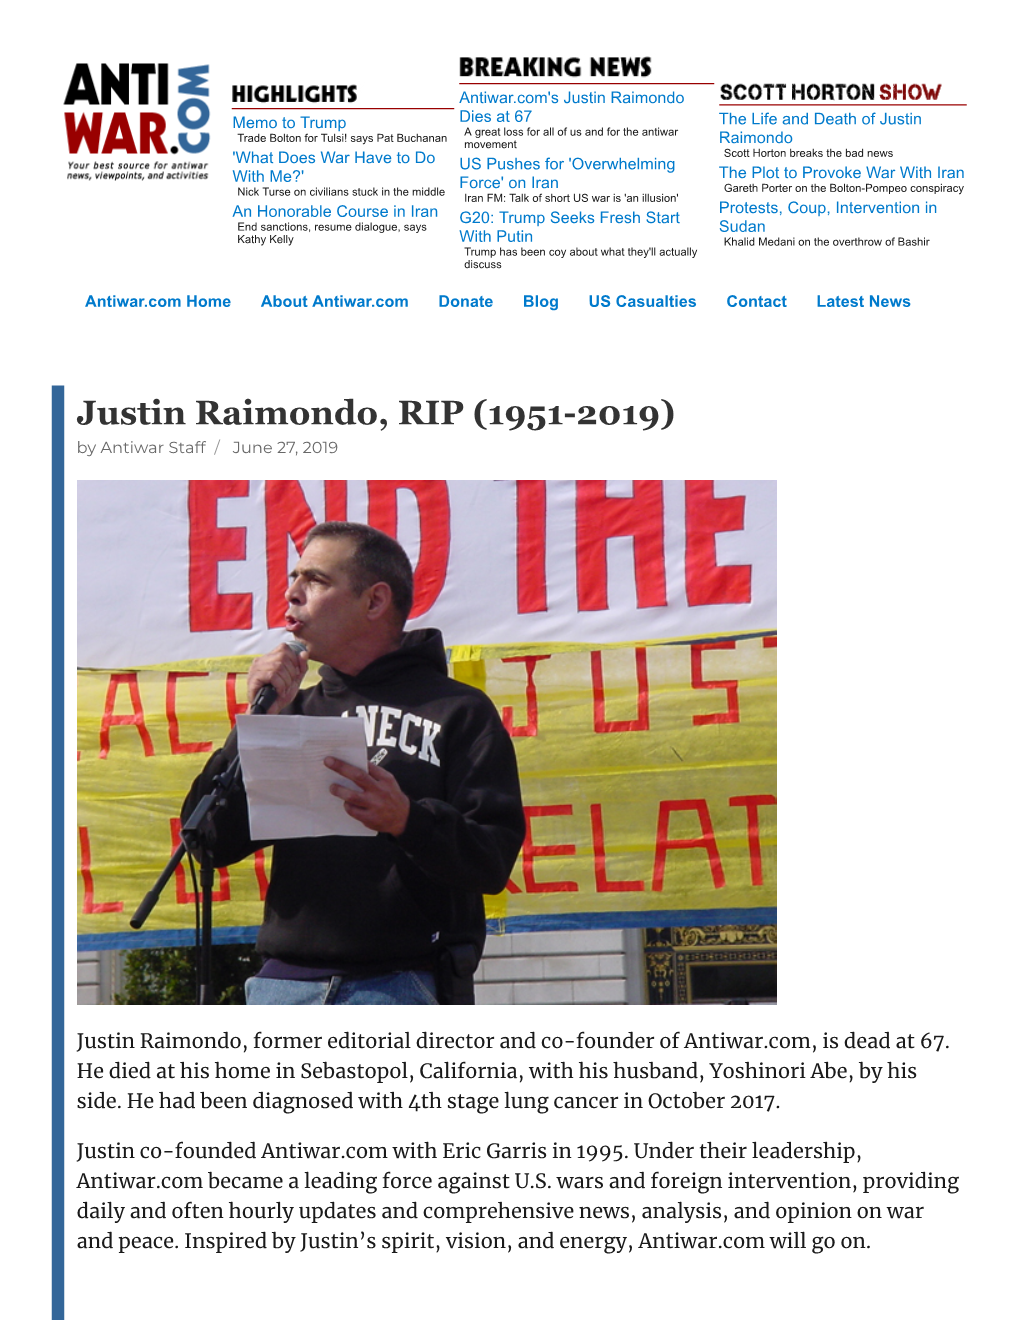 Justin Raimondo, RIP (1951-2019) by Antiwar Staff / June 27, 2019